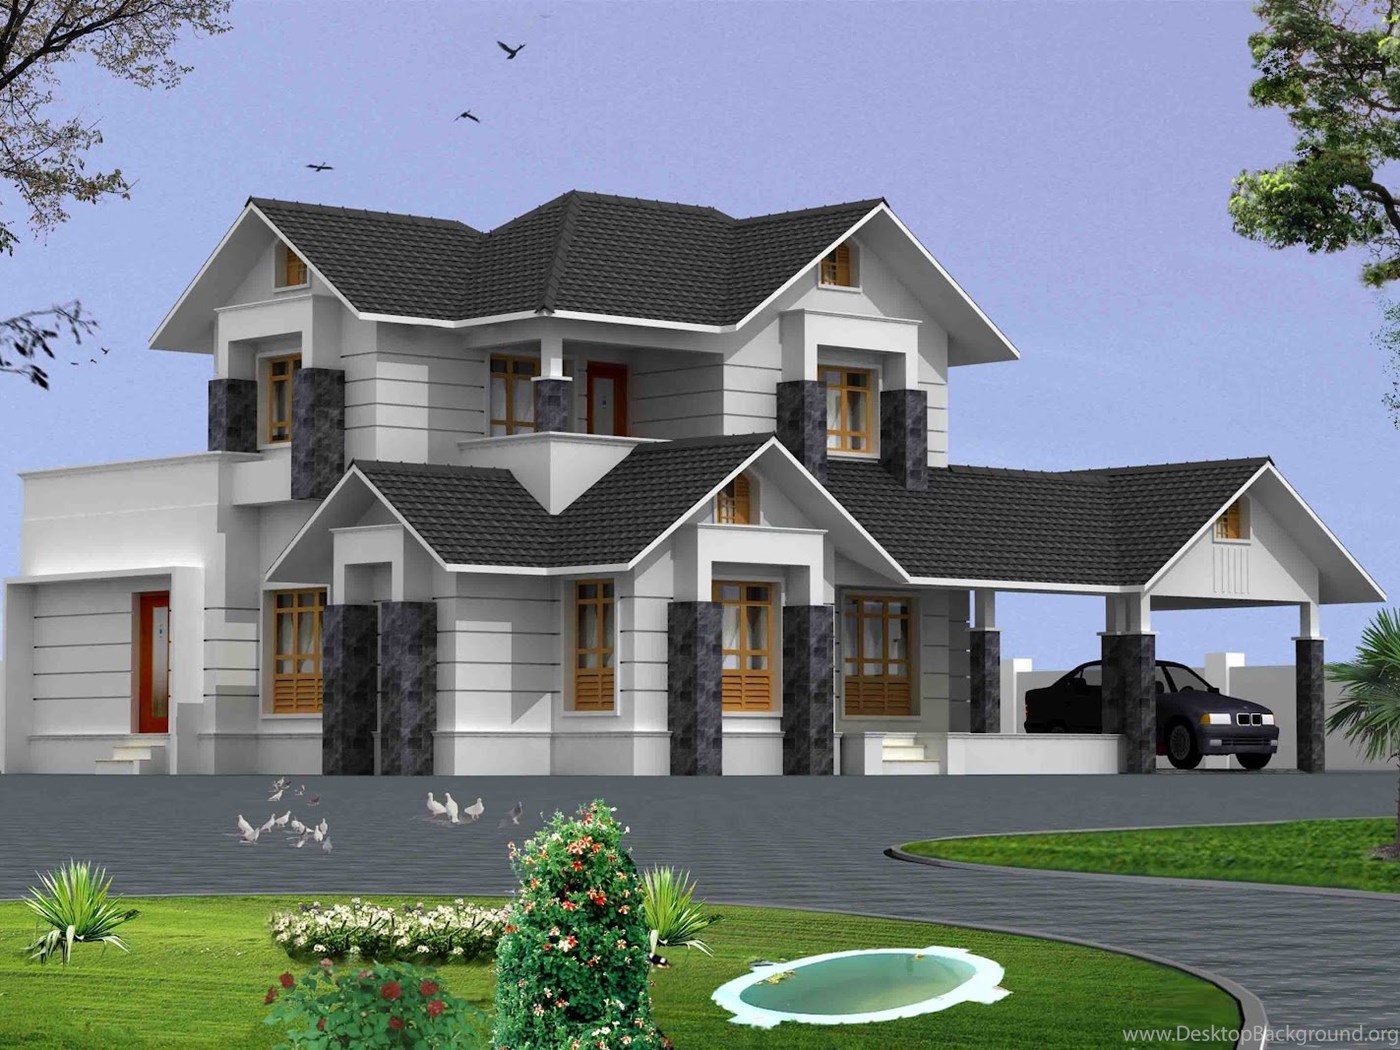 Download Home Design Plans 3d Wallpapers Hd Barkley Home Stead Desktop Background